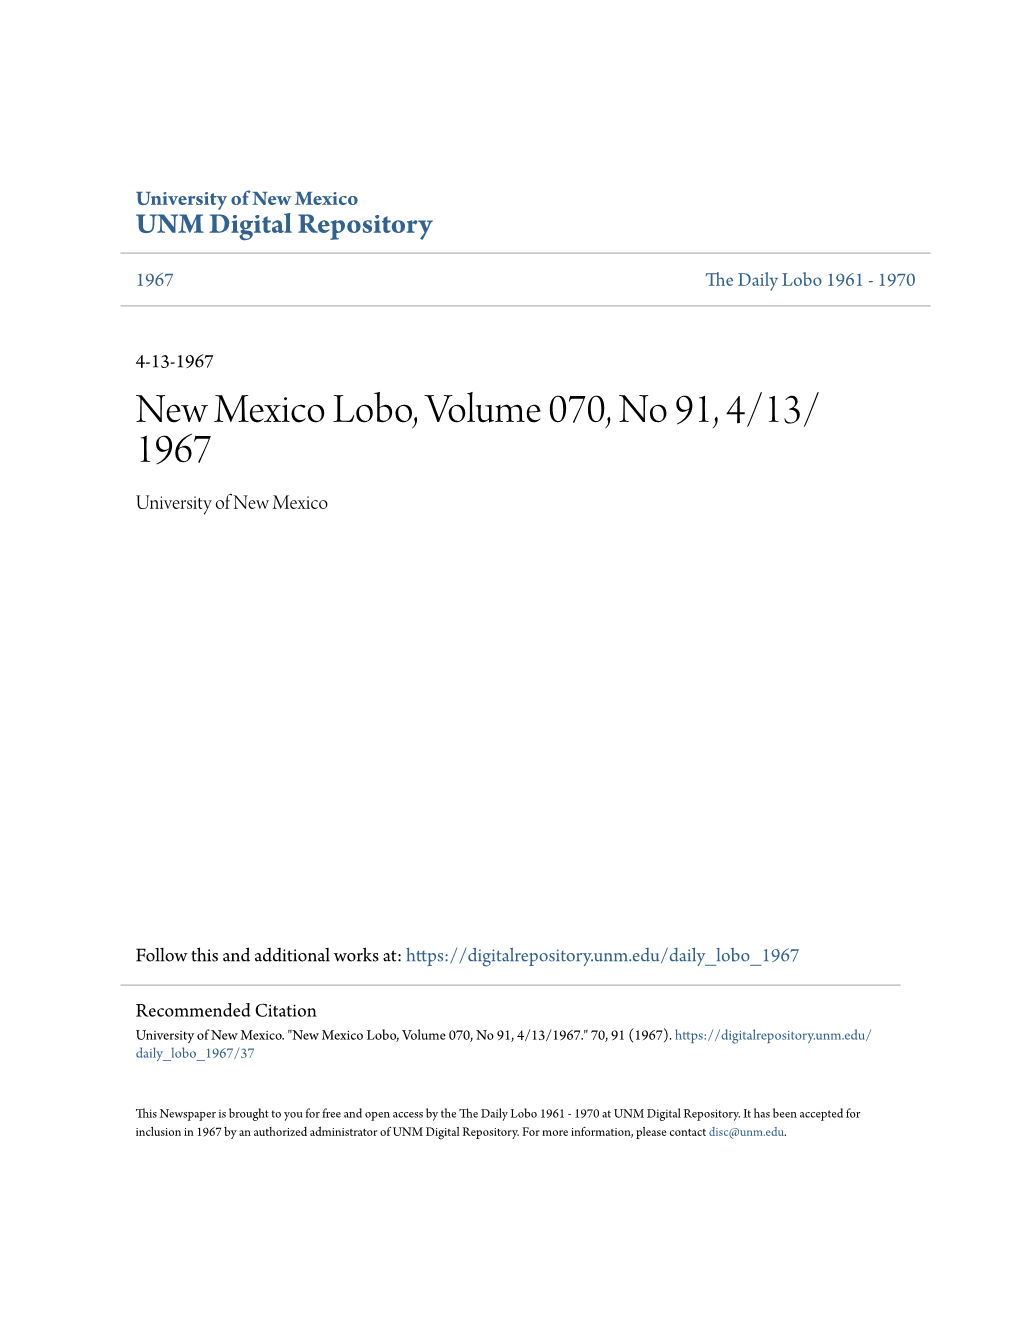 New Mexico Lobo, Volume 070, No 91, 4/13/1967." 70, 91 (1967)